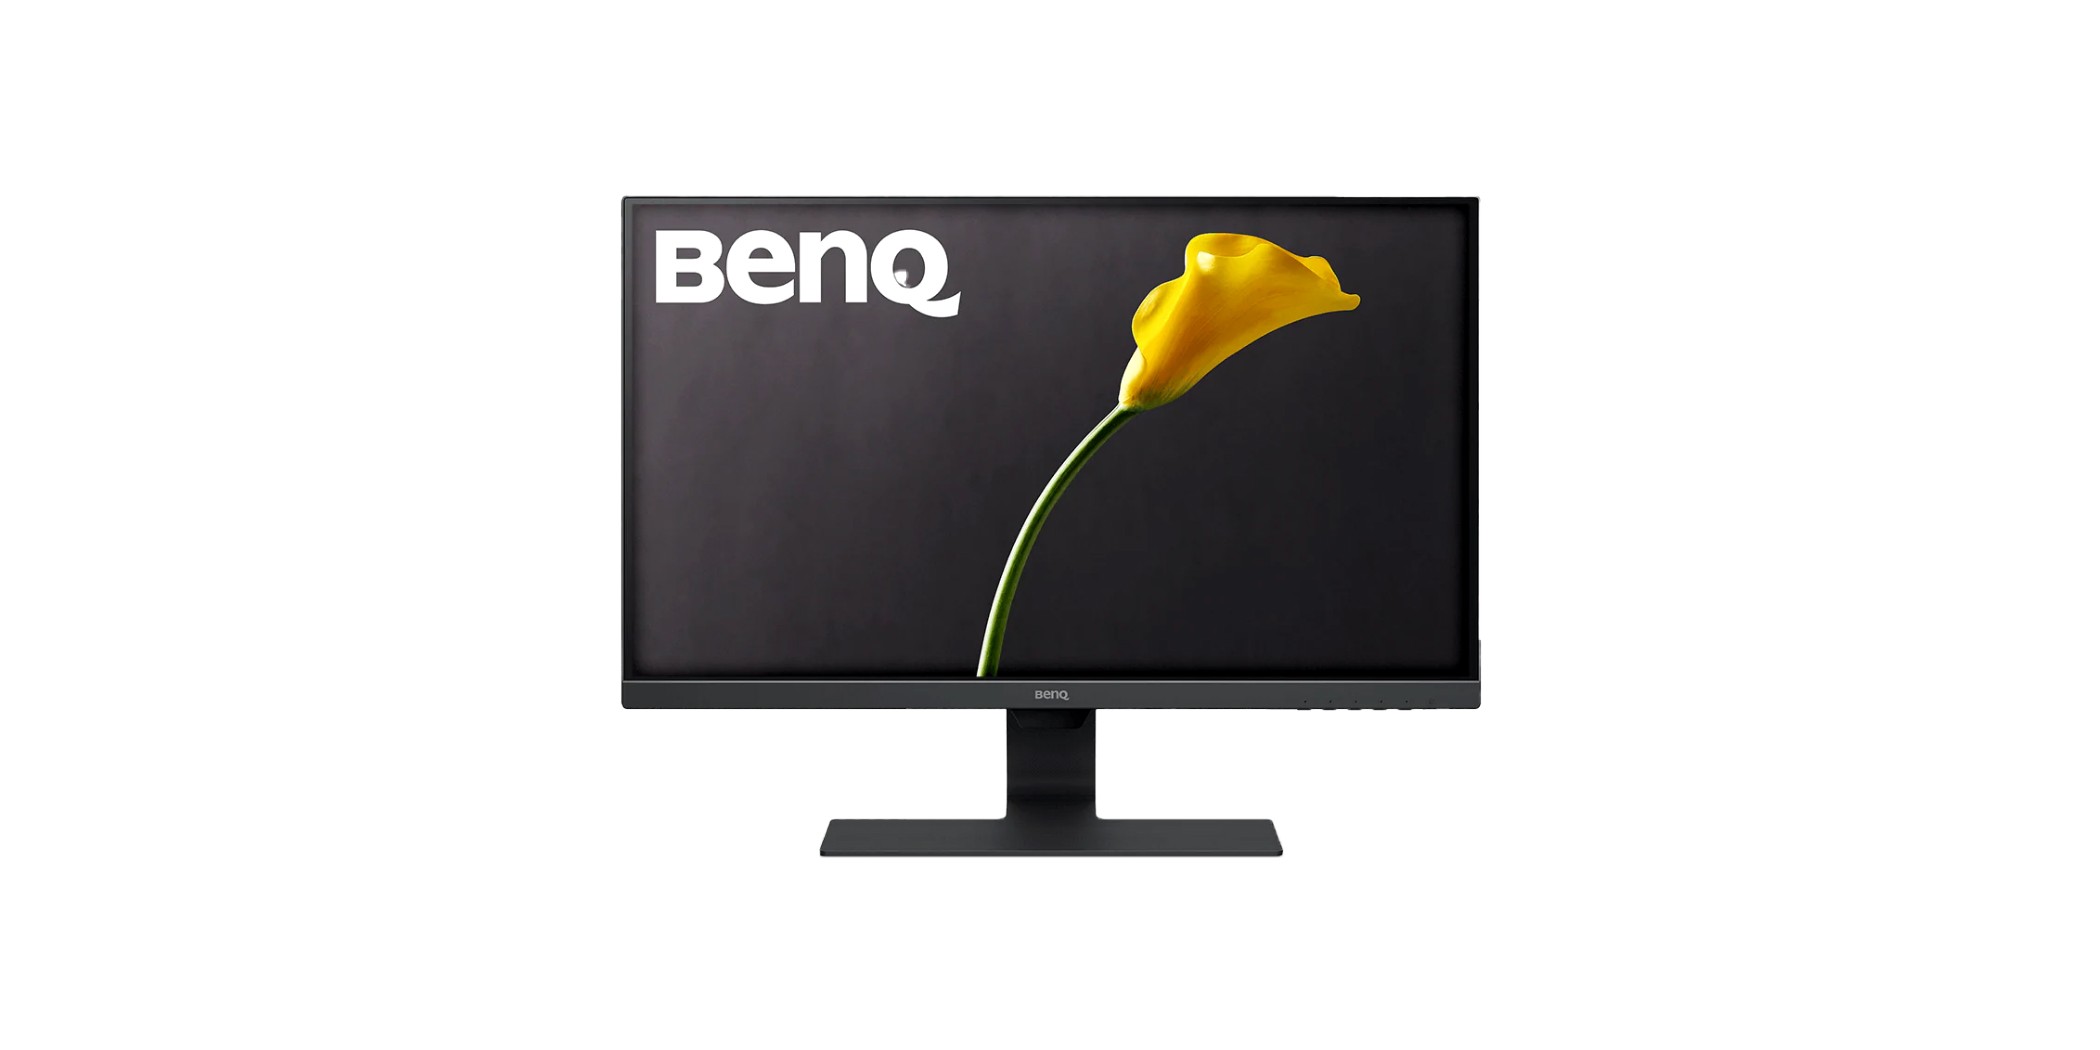 BenQ Stylish Monitor With 27 inch GW2780